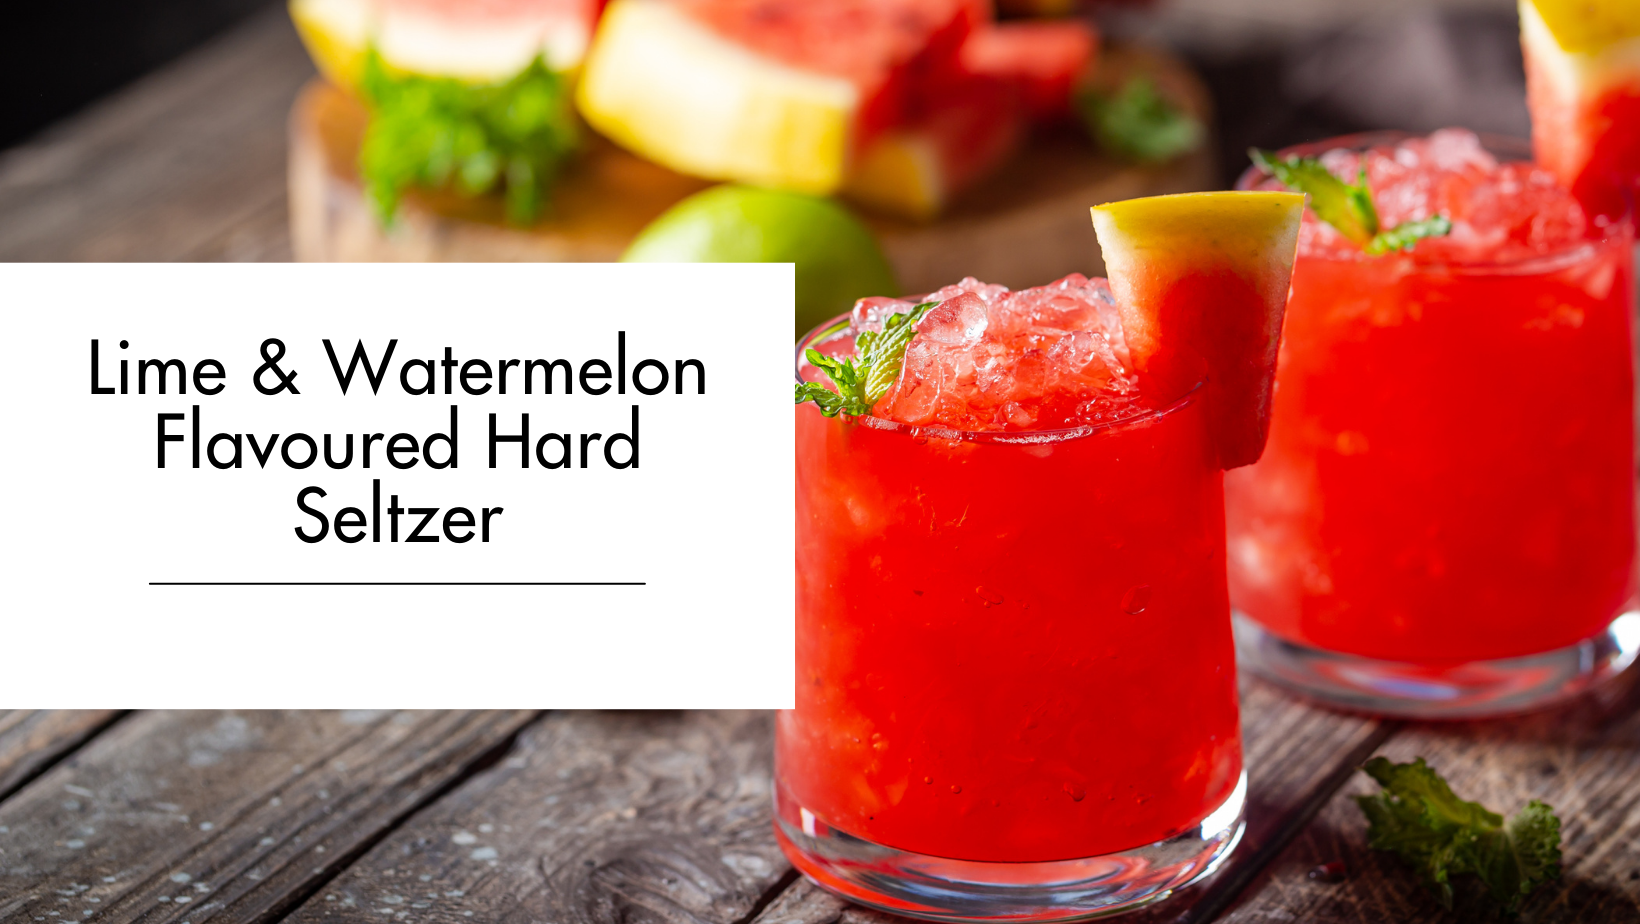 Lime & Watermelon Flavoured Hard Seltzer